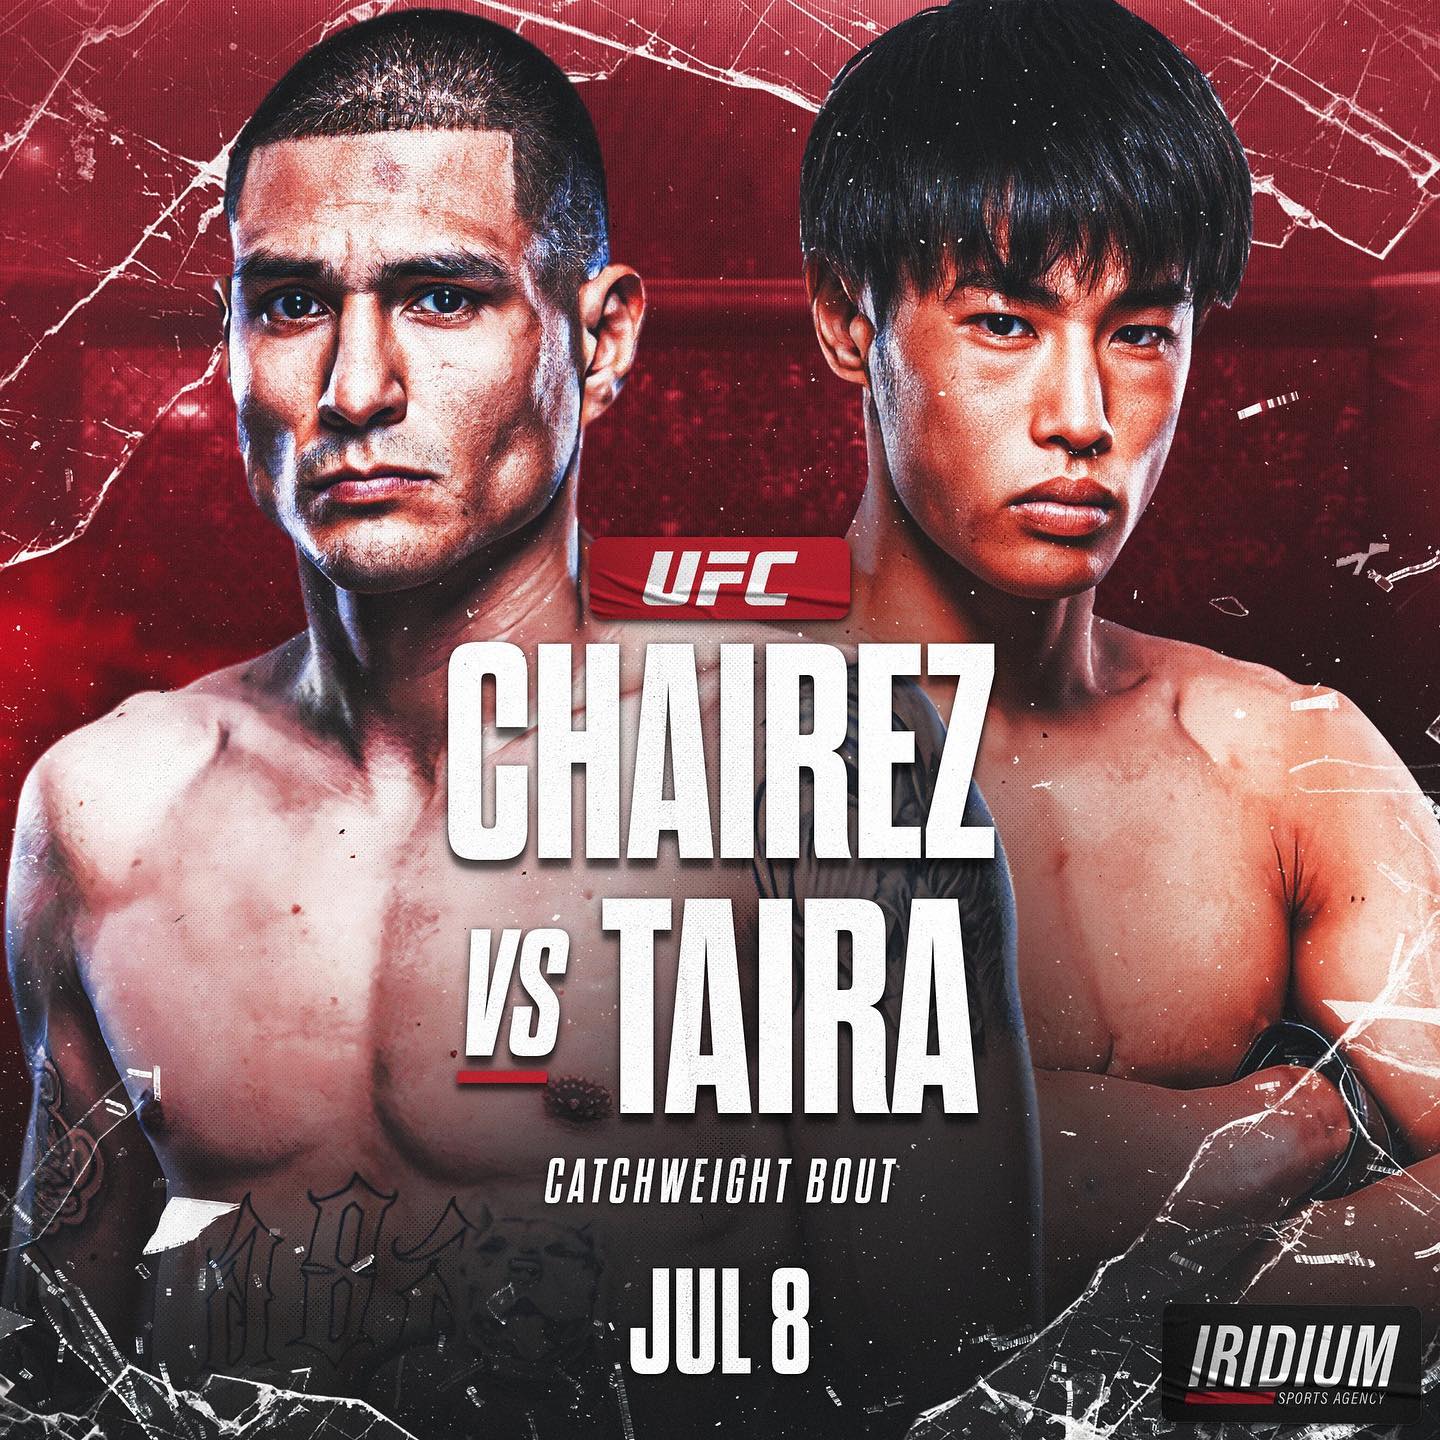 New departure of Tatsuro Taira!  #TeamIridium News  Top @ufc prospects Edgar Chairez & @tatsurotaira enter the Octagon in a must-see matchup July 8 　#UFC290#平良達郎#修斗